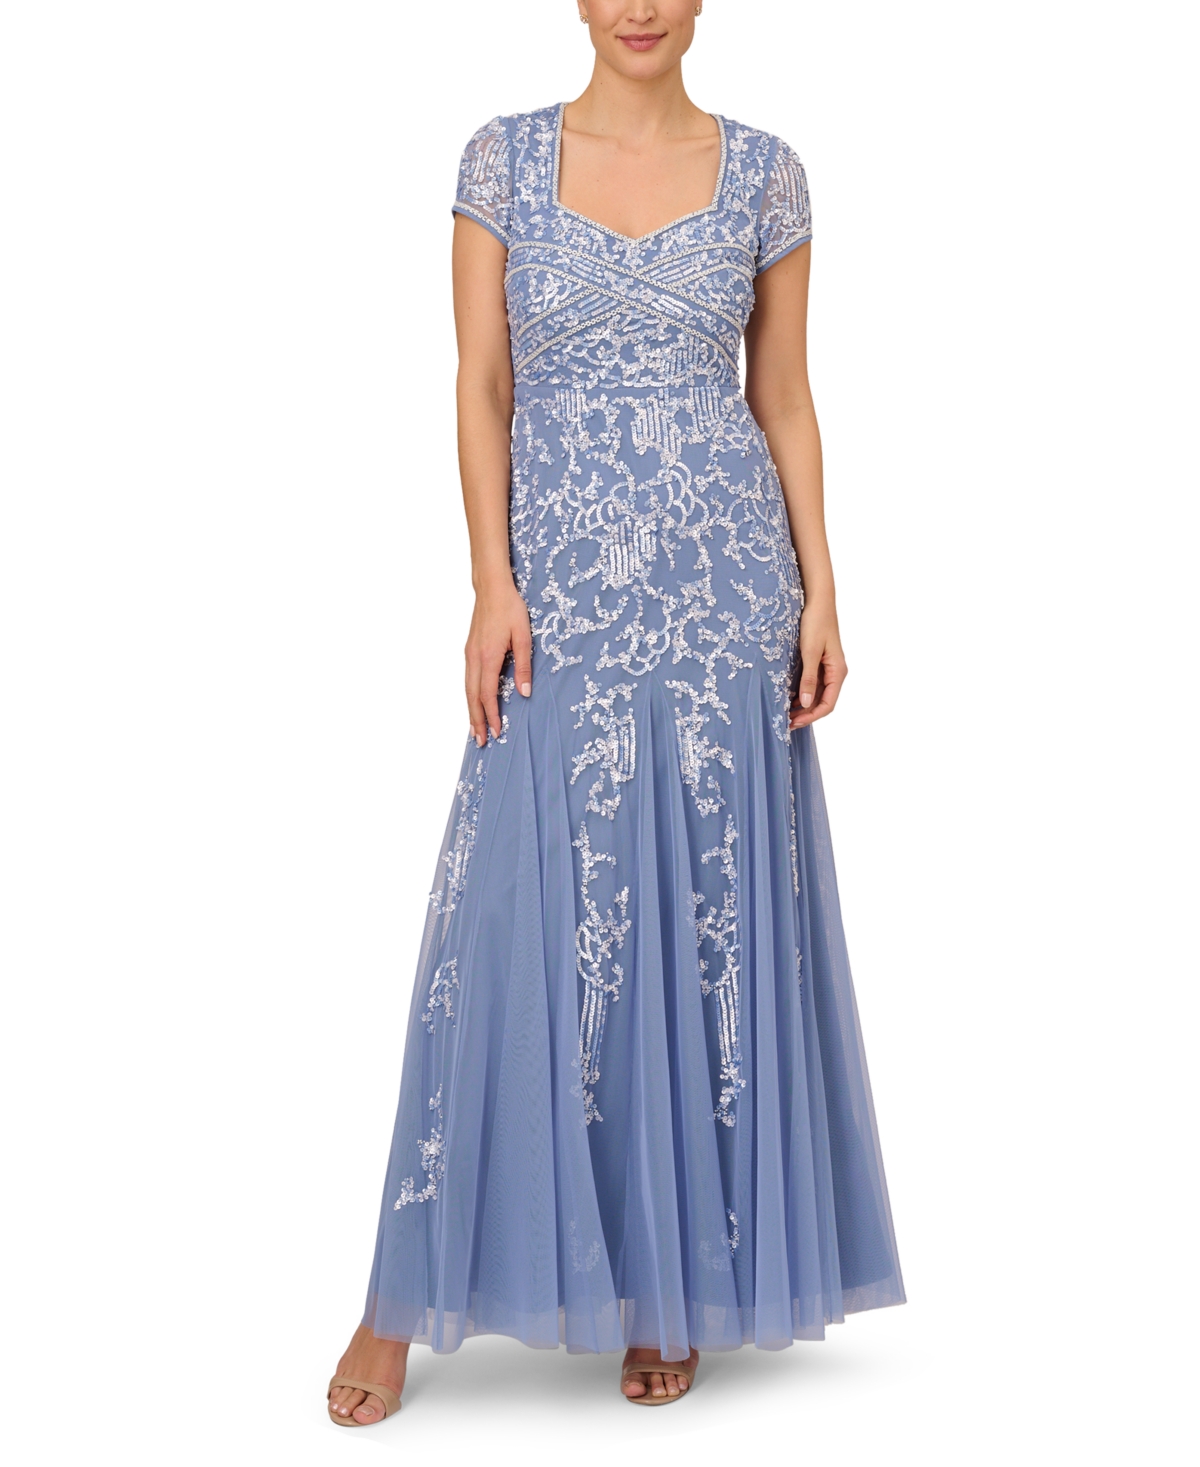 1920s Evening Dresses & Formal Gowns Adrianna Papell Embellished Godet Gown - French Blue $349.00 AT vintagedancer.com